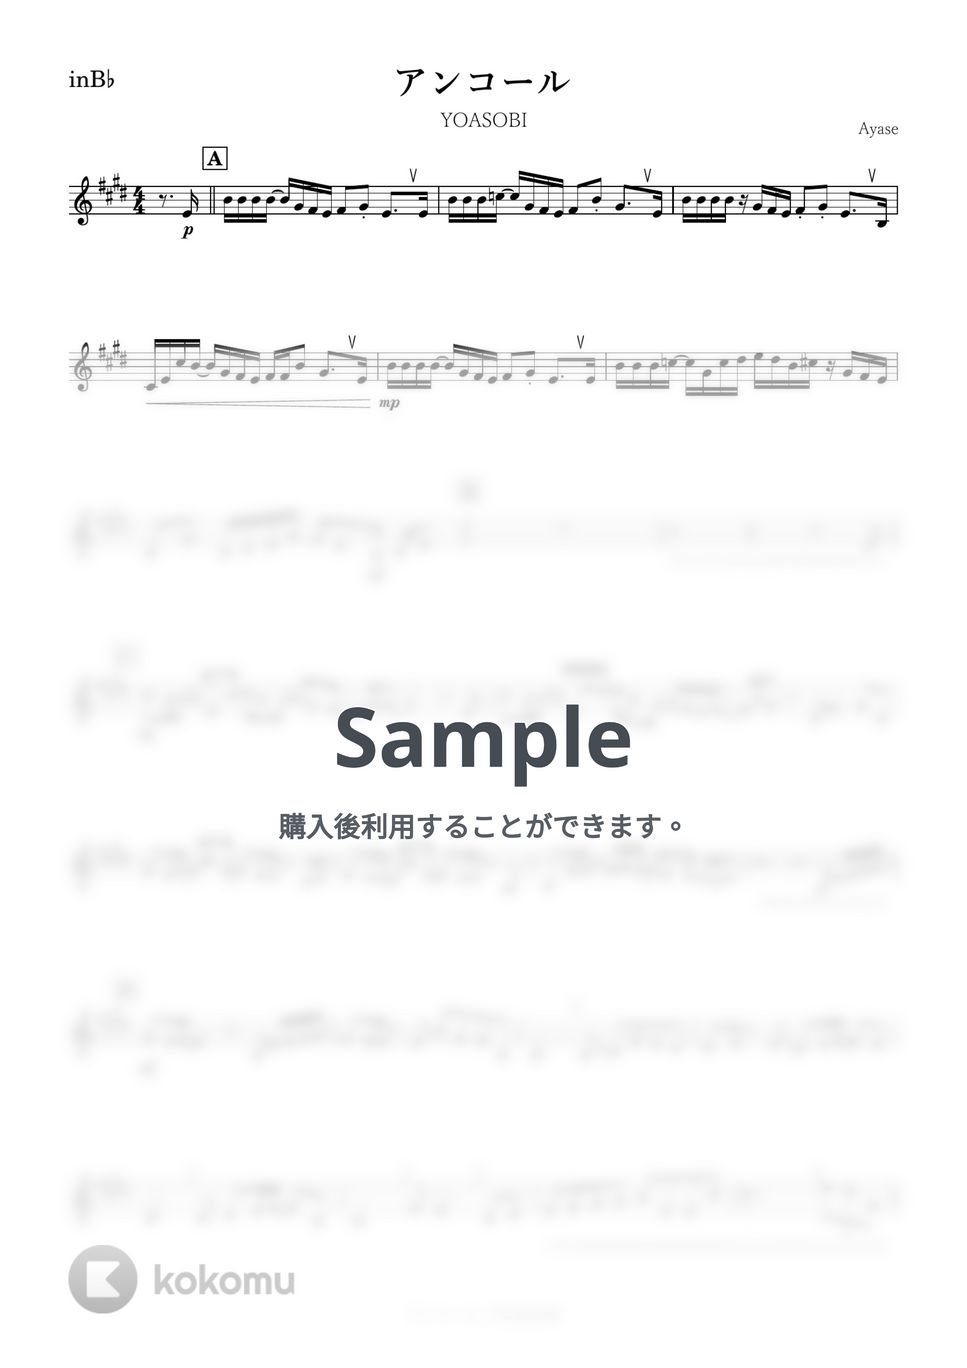 YOASOBI - アンコール (B♭) by kanamusic